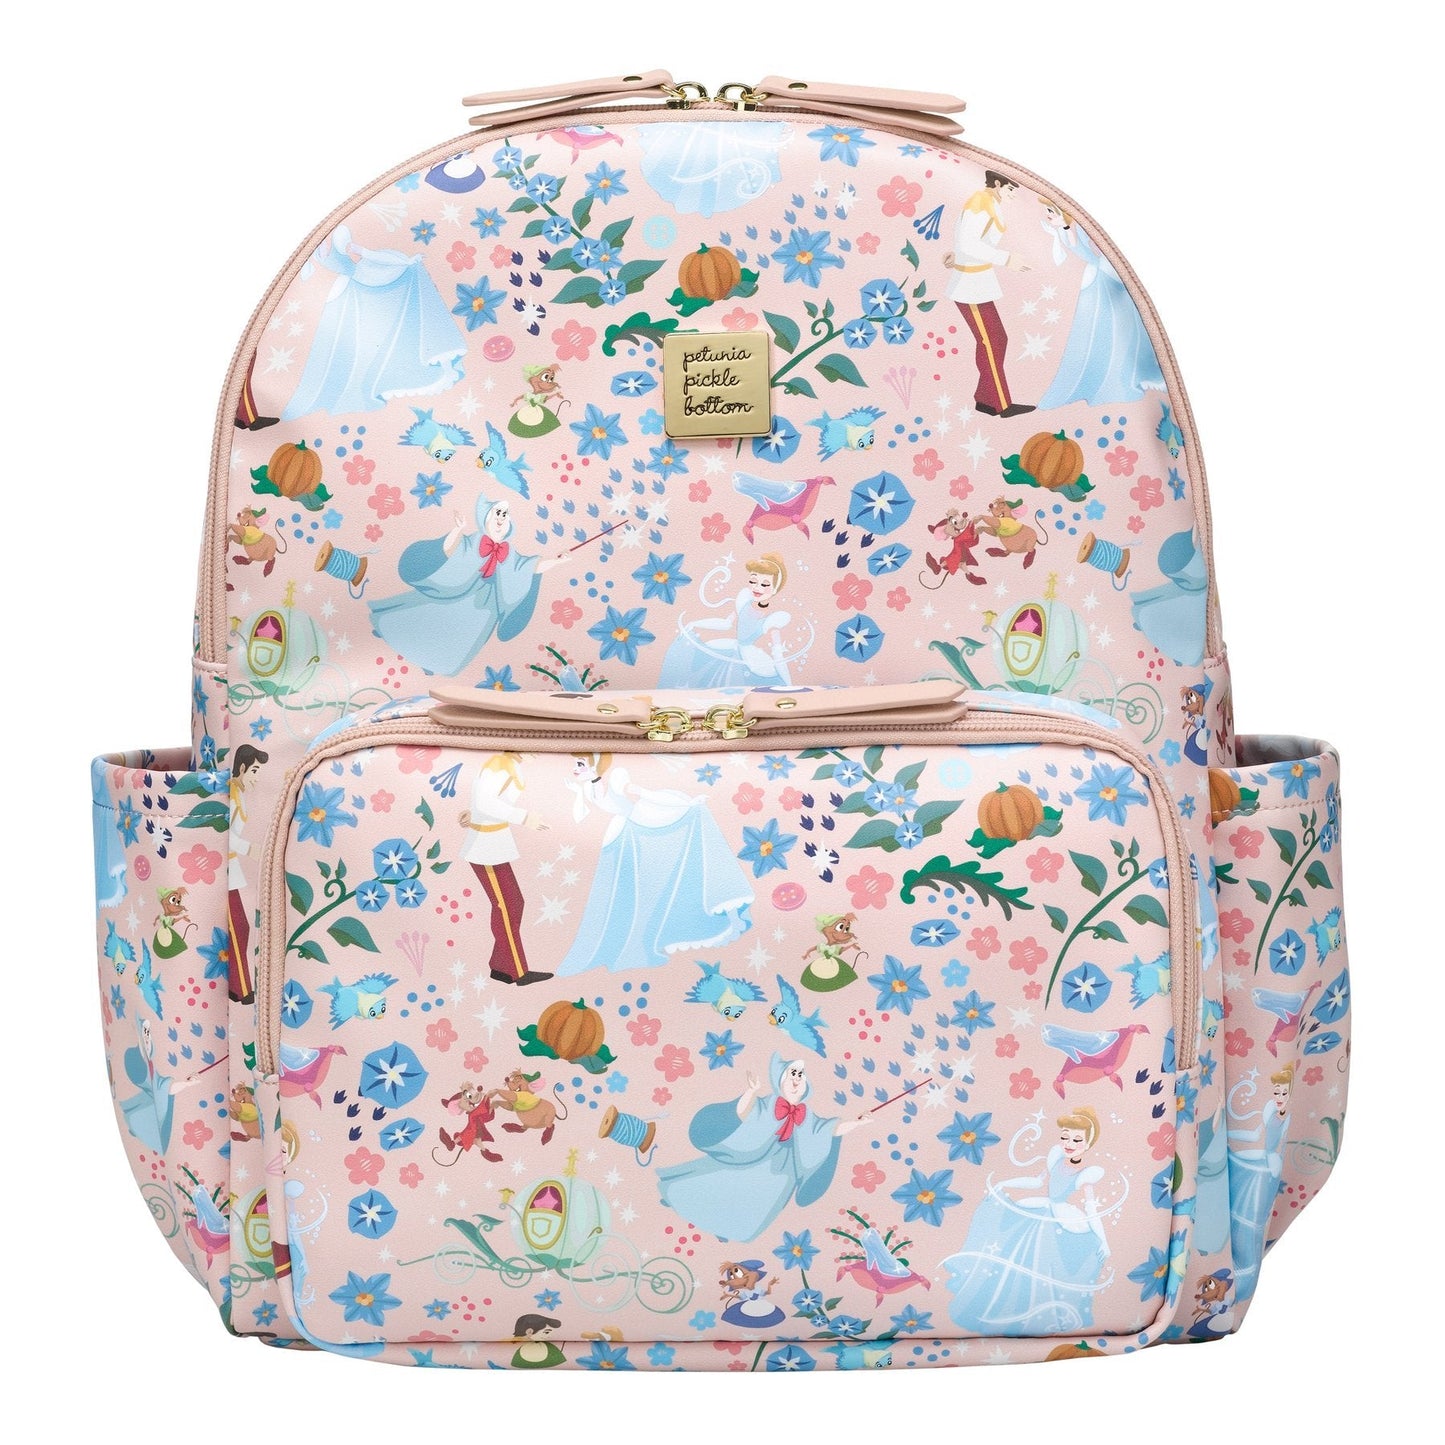 Petunia Pickle Bottom District Backpack In Disney's Cinderella Backpack